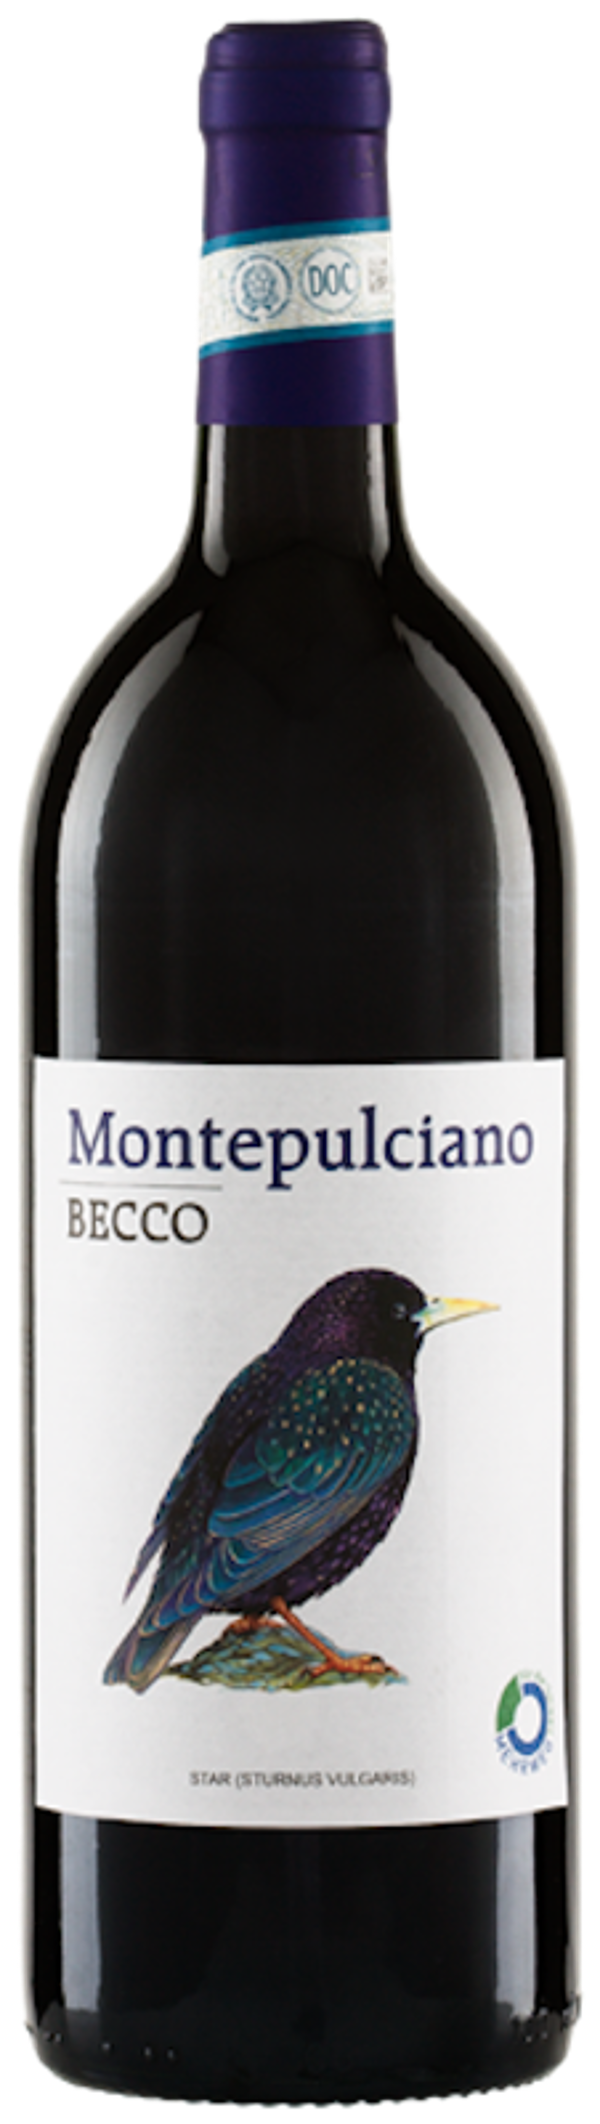 Produktfoto zu Becco Montepulciano rot (1 L)